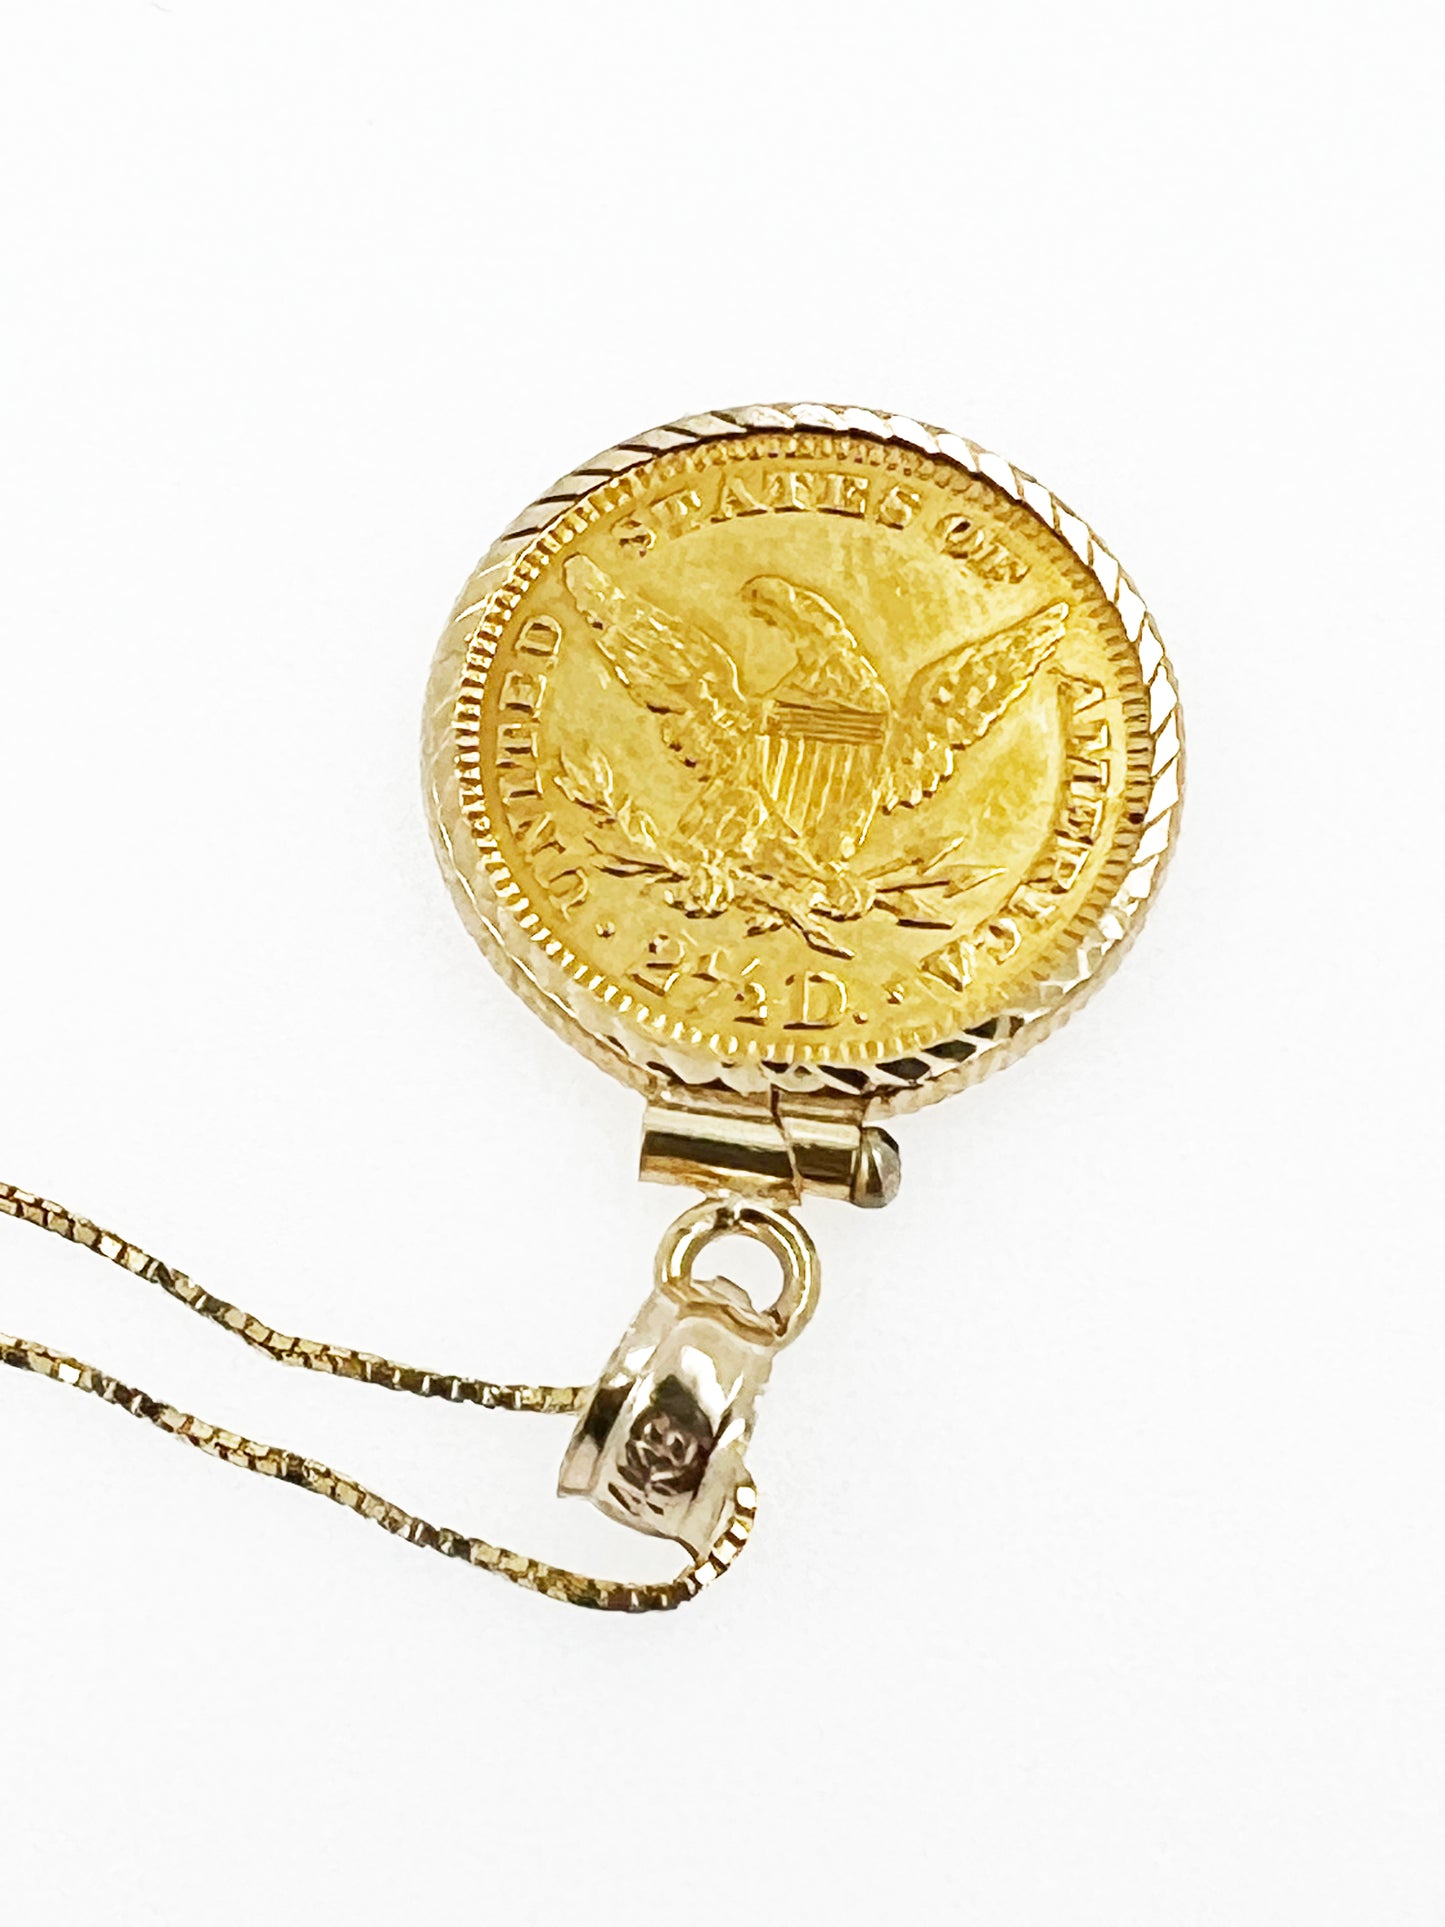 1905 $2.5 Liberty Quarter Pendant (21.6k) in 14k Yellow Gold Mounting